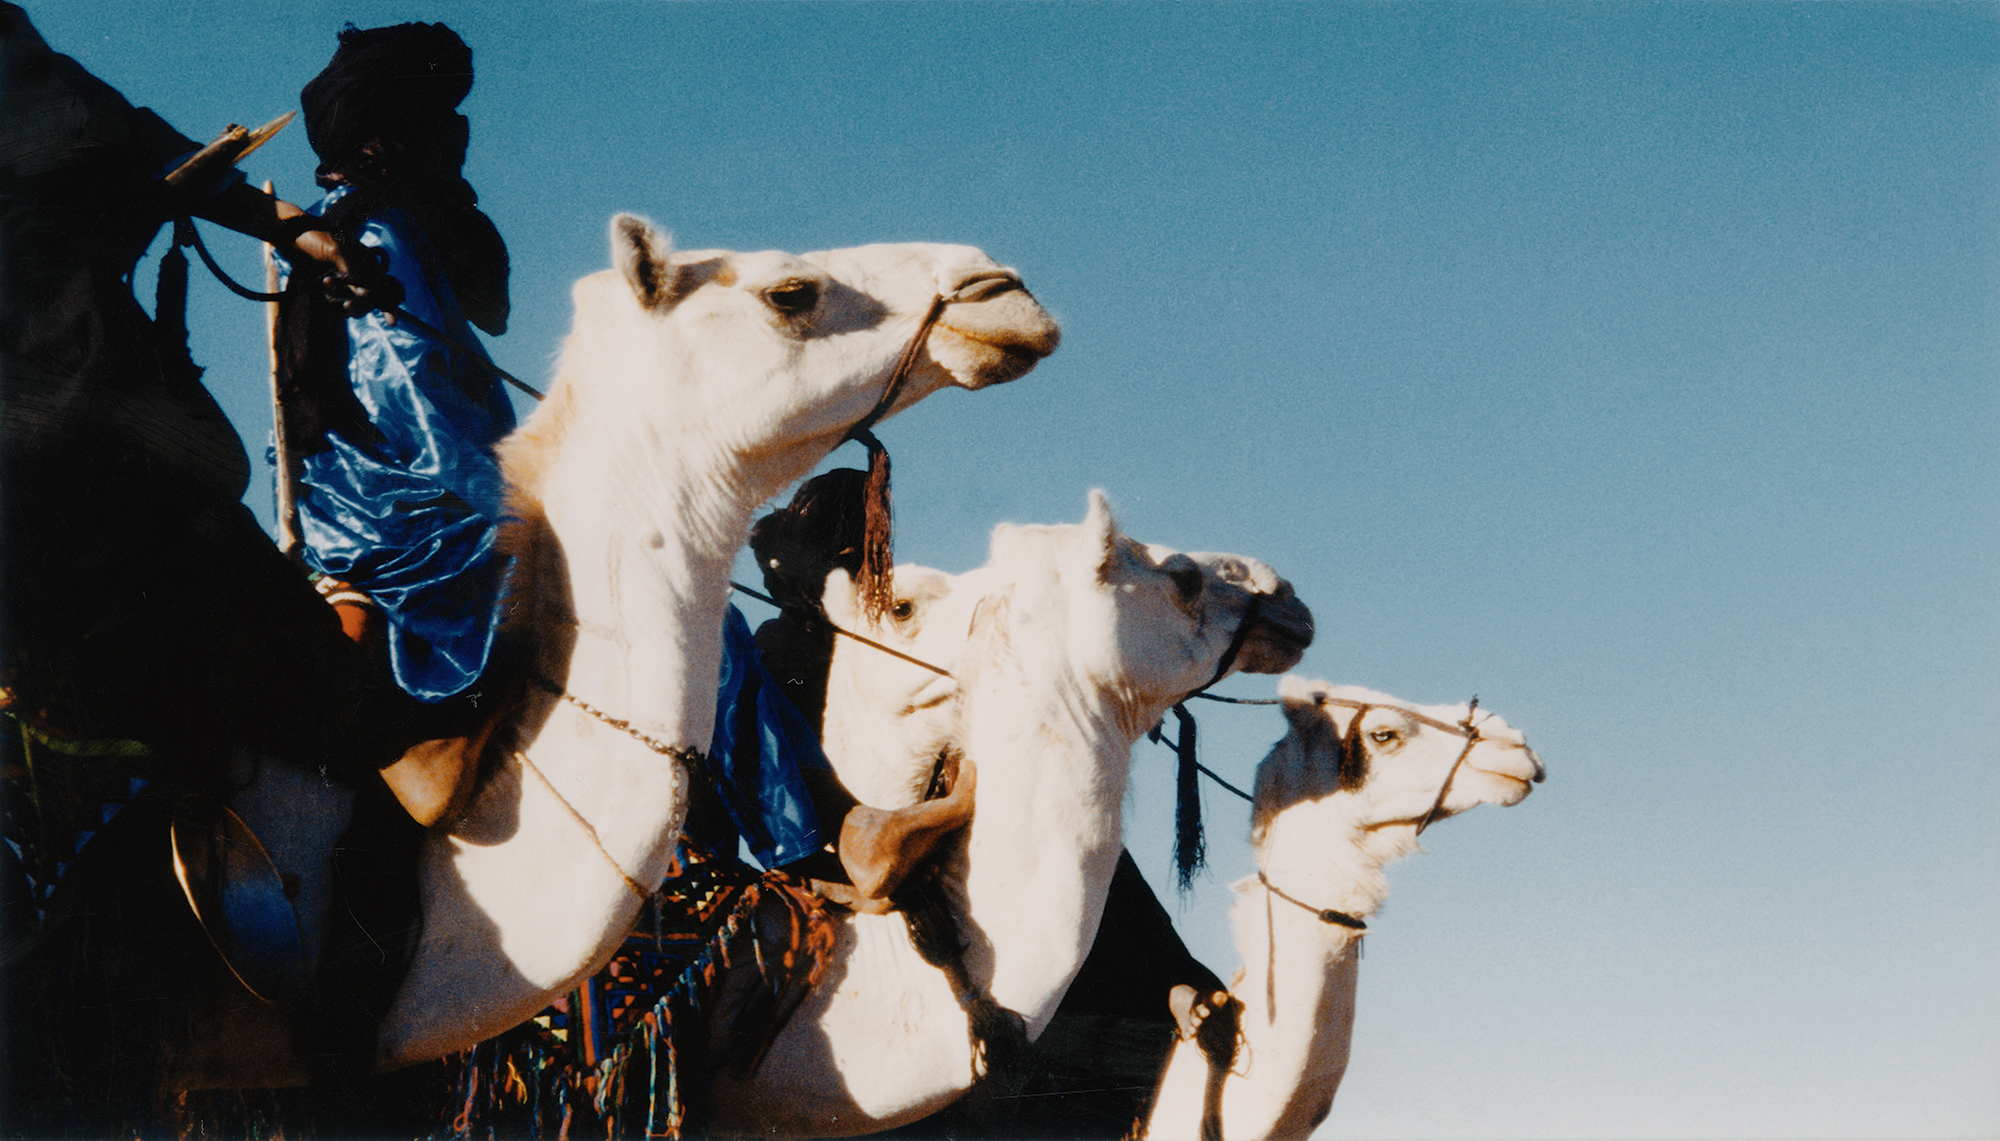 The blue men of the Sahara - BBC Travel